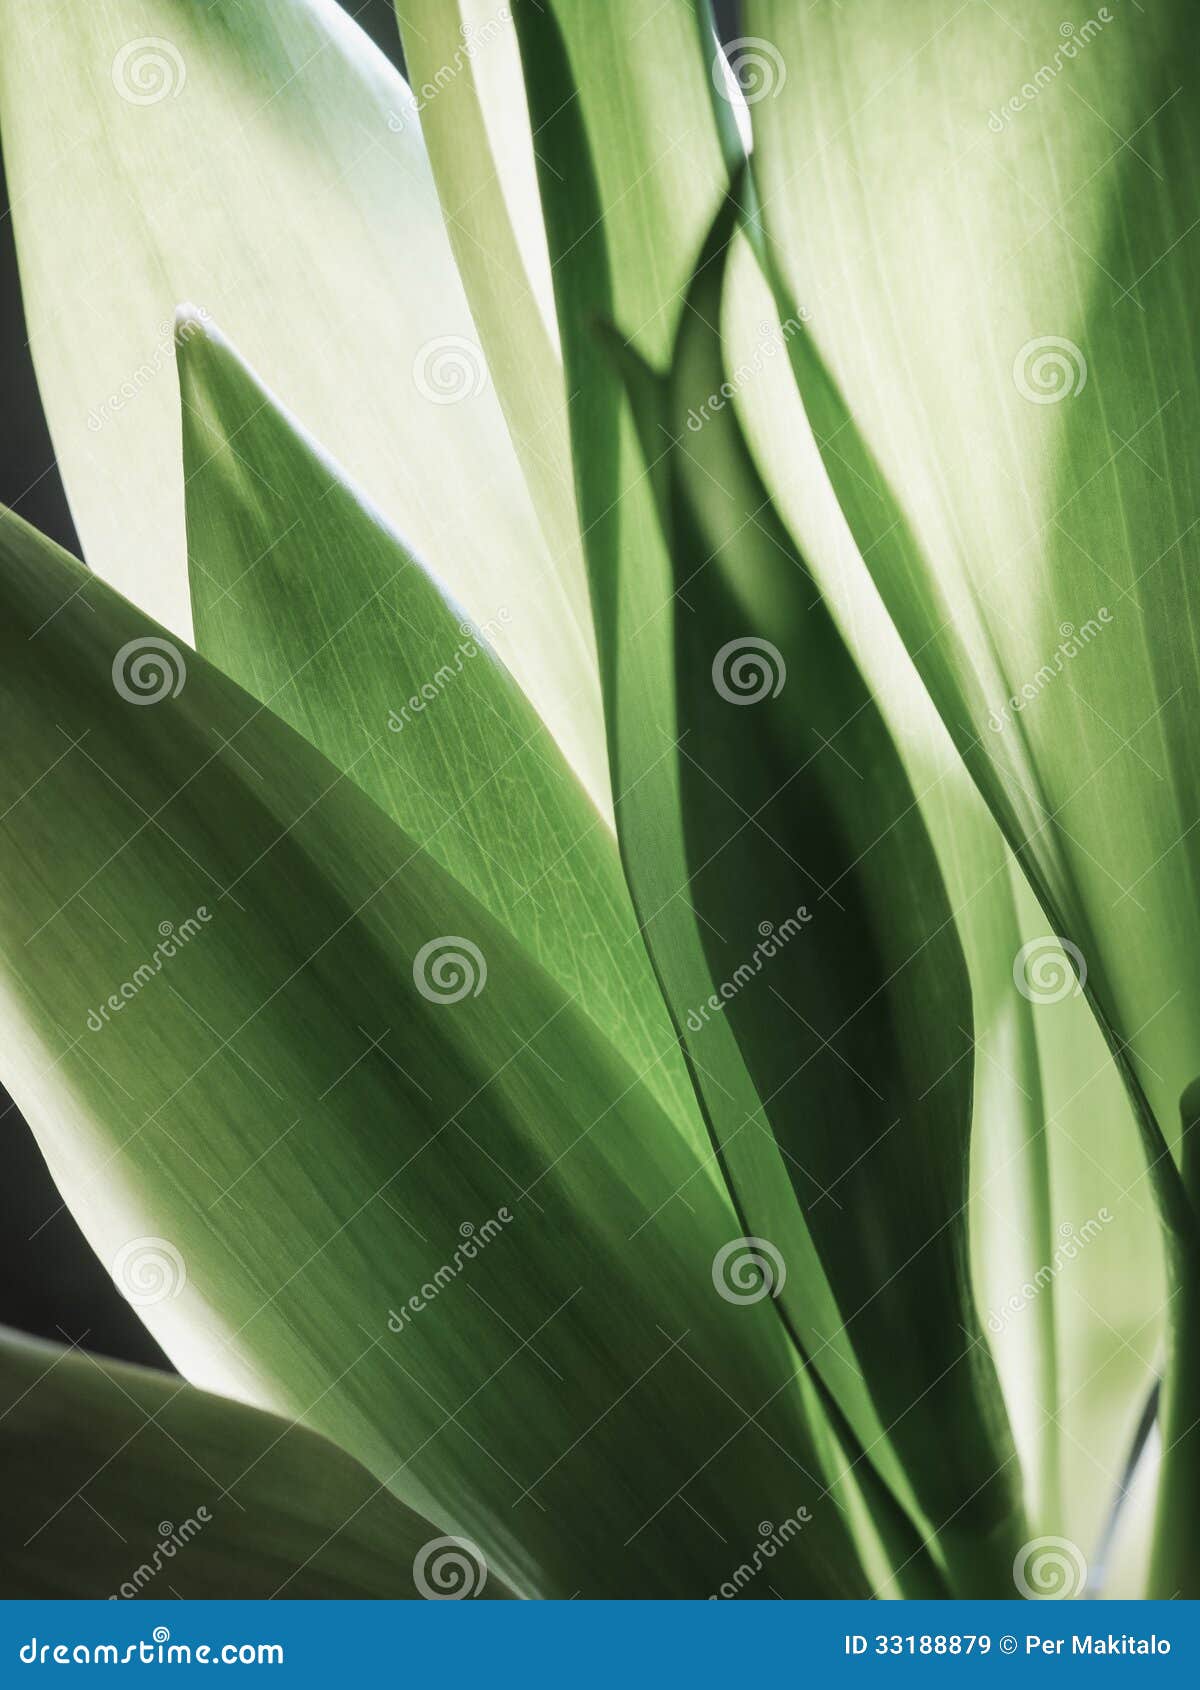 Tulip Leaf Stock Image Image Of Vertical Scenic Copy 33188879